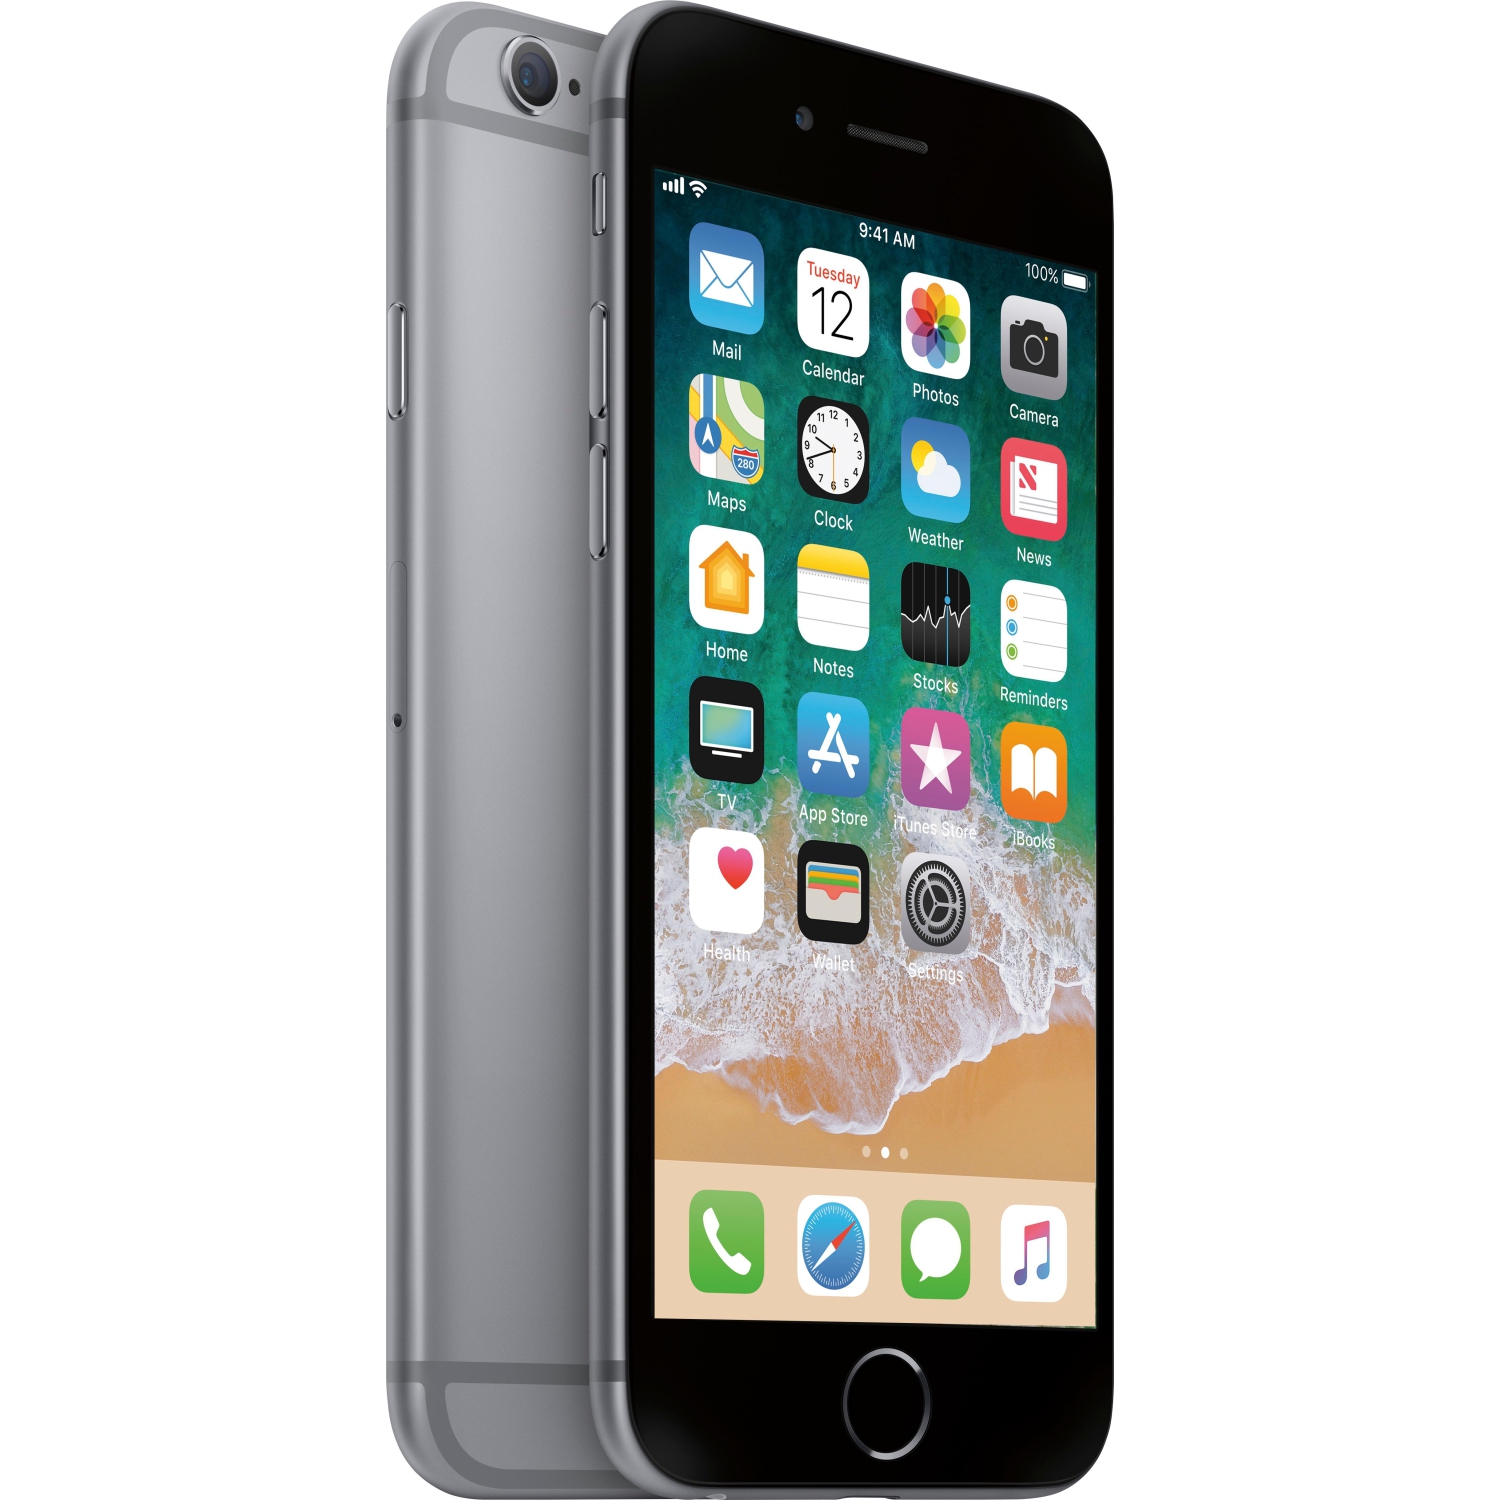 Refurbished (Good) - Apple iPhone 6s 64GB Smartphone - Space Gray - Unlocked